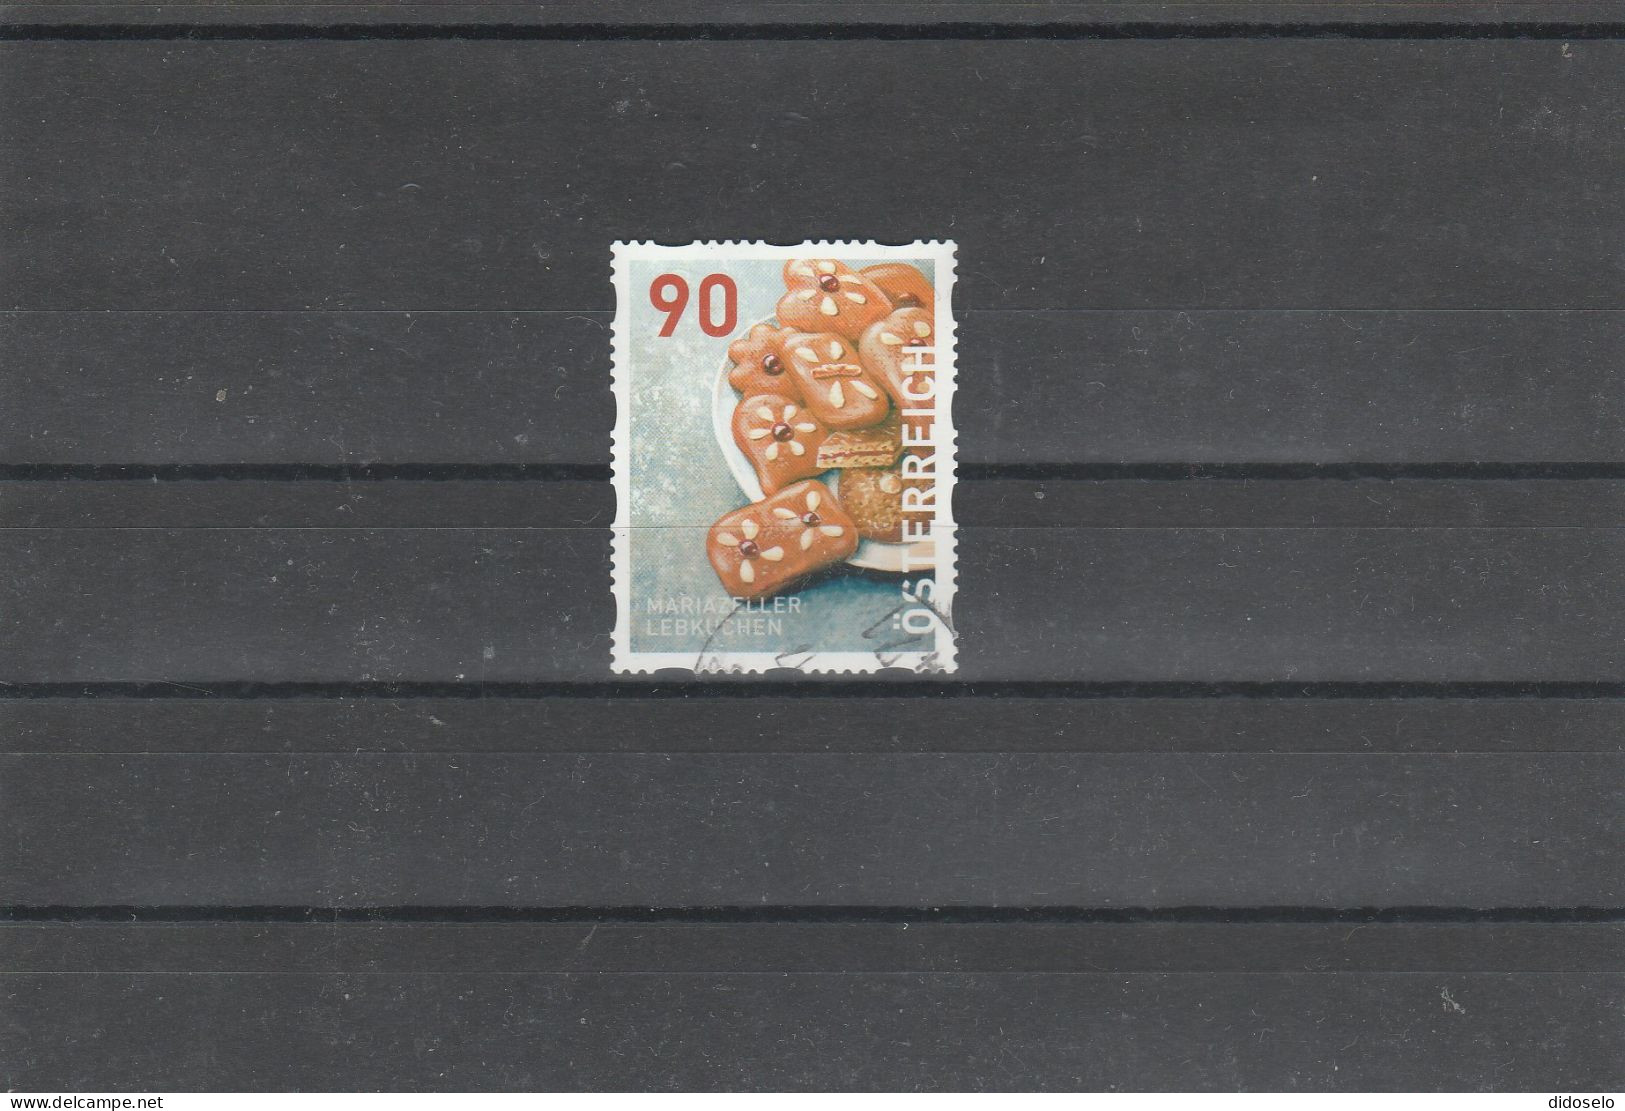 Austria - 2019 - Dispenser Stamp - Used - Mic.#14 - Used Stamps